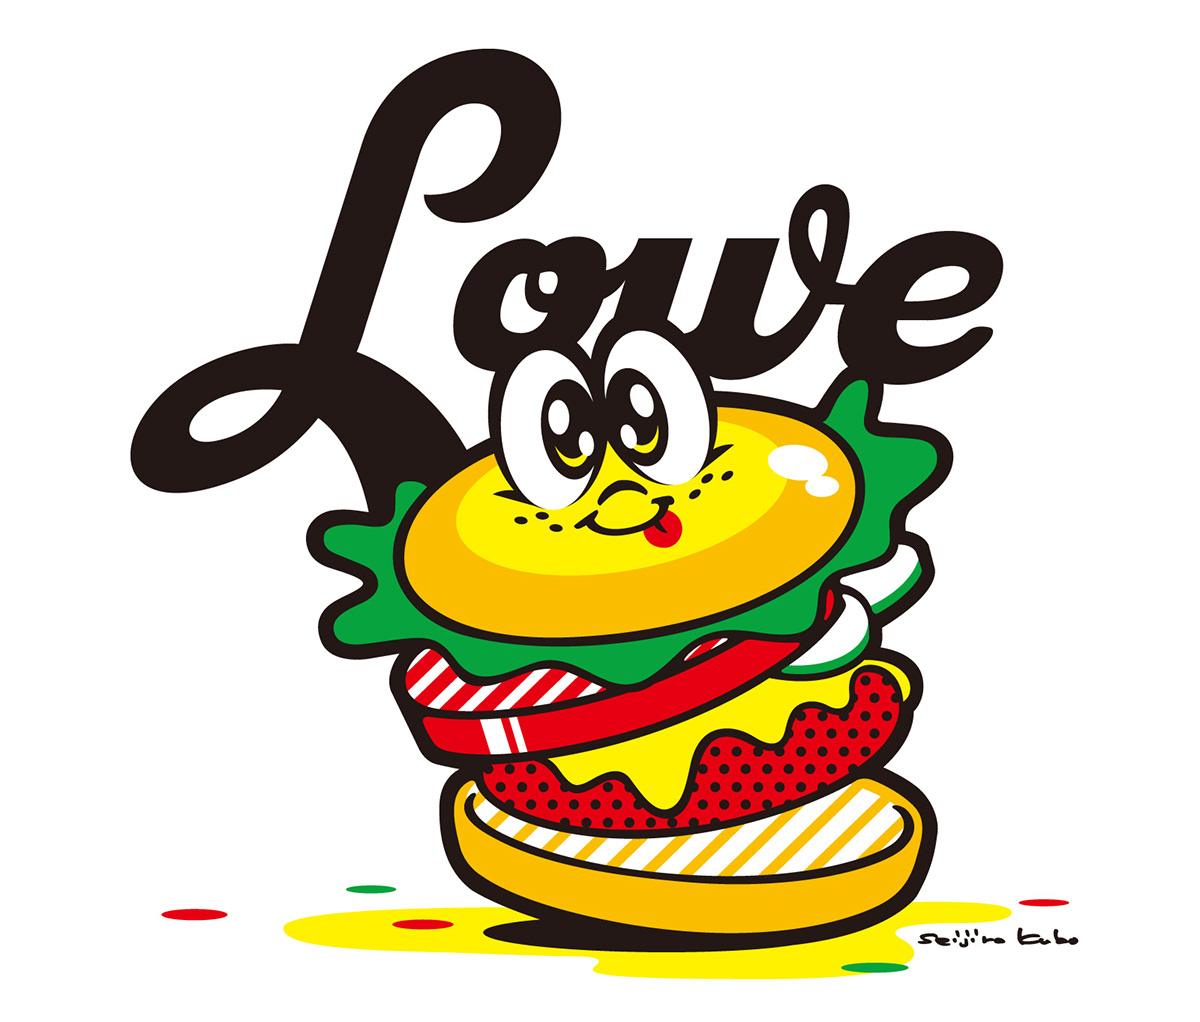 characterdesign chracter food illustration foodart hamburger hot dog ILLUSTRATION  junkfood Pop Art popcorn